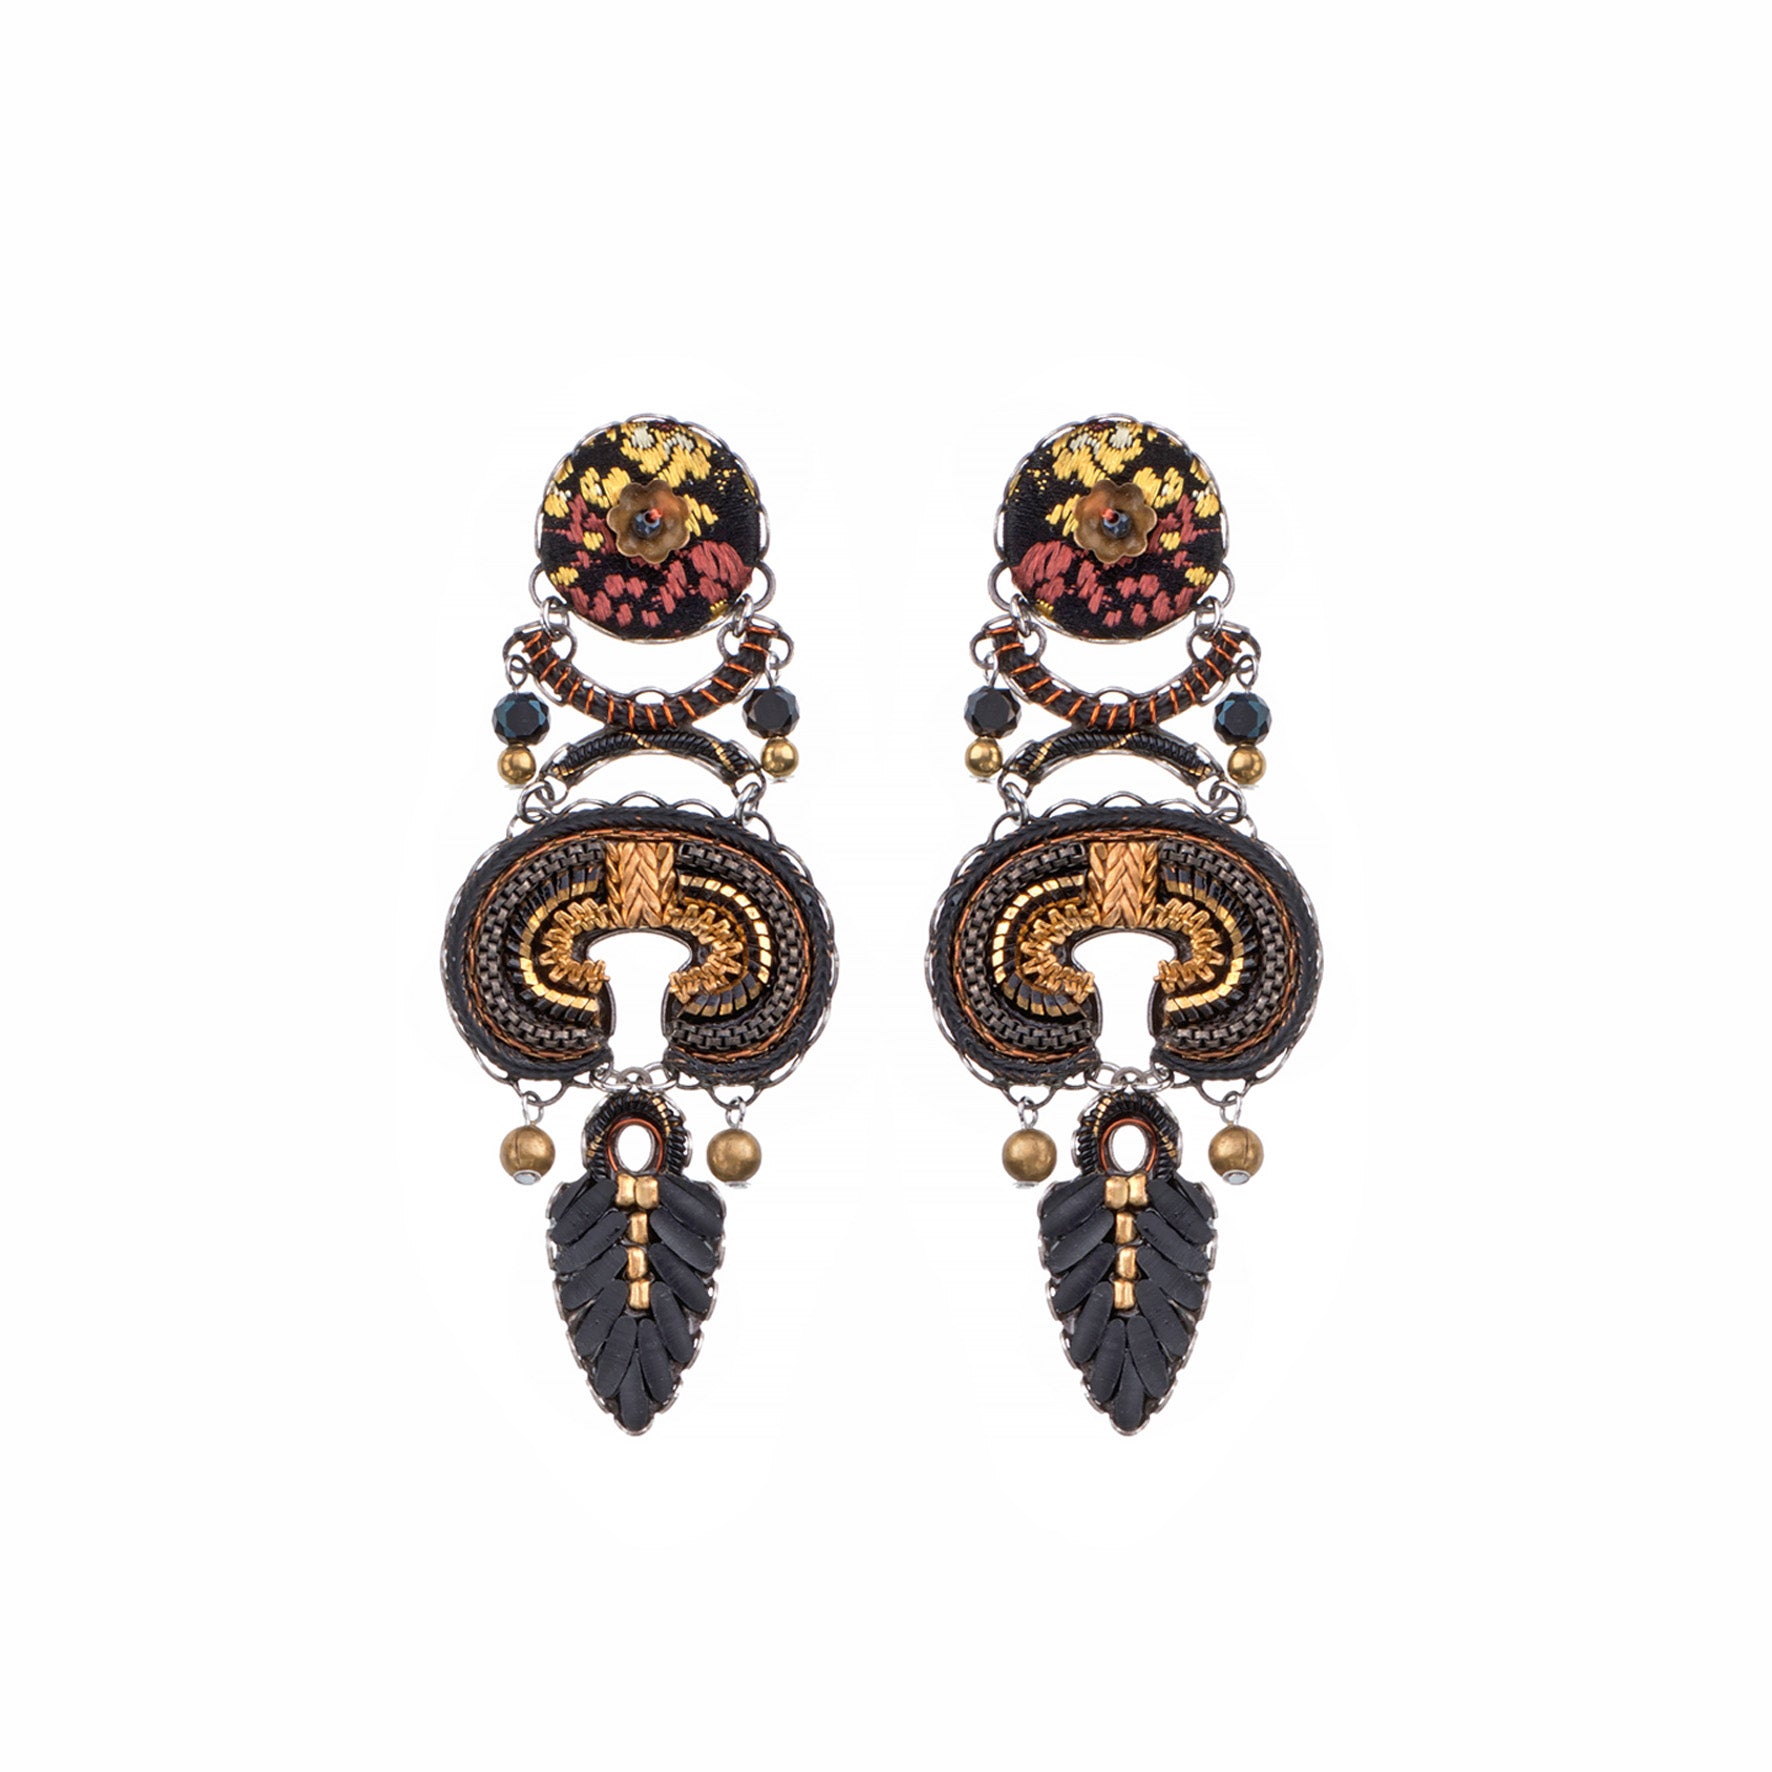 Indigo Royalty earrings